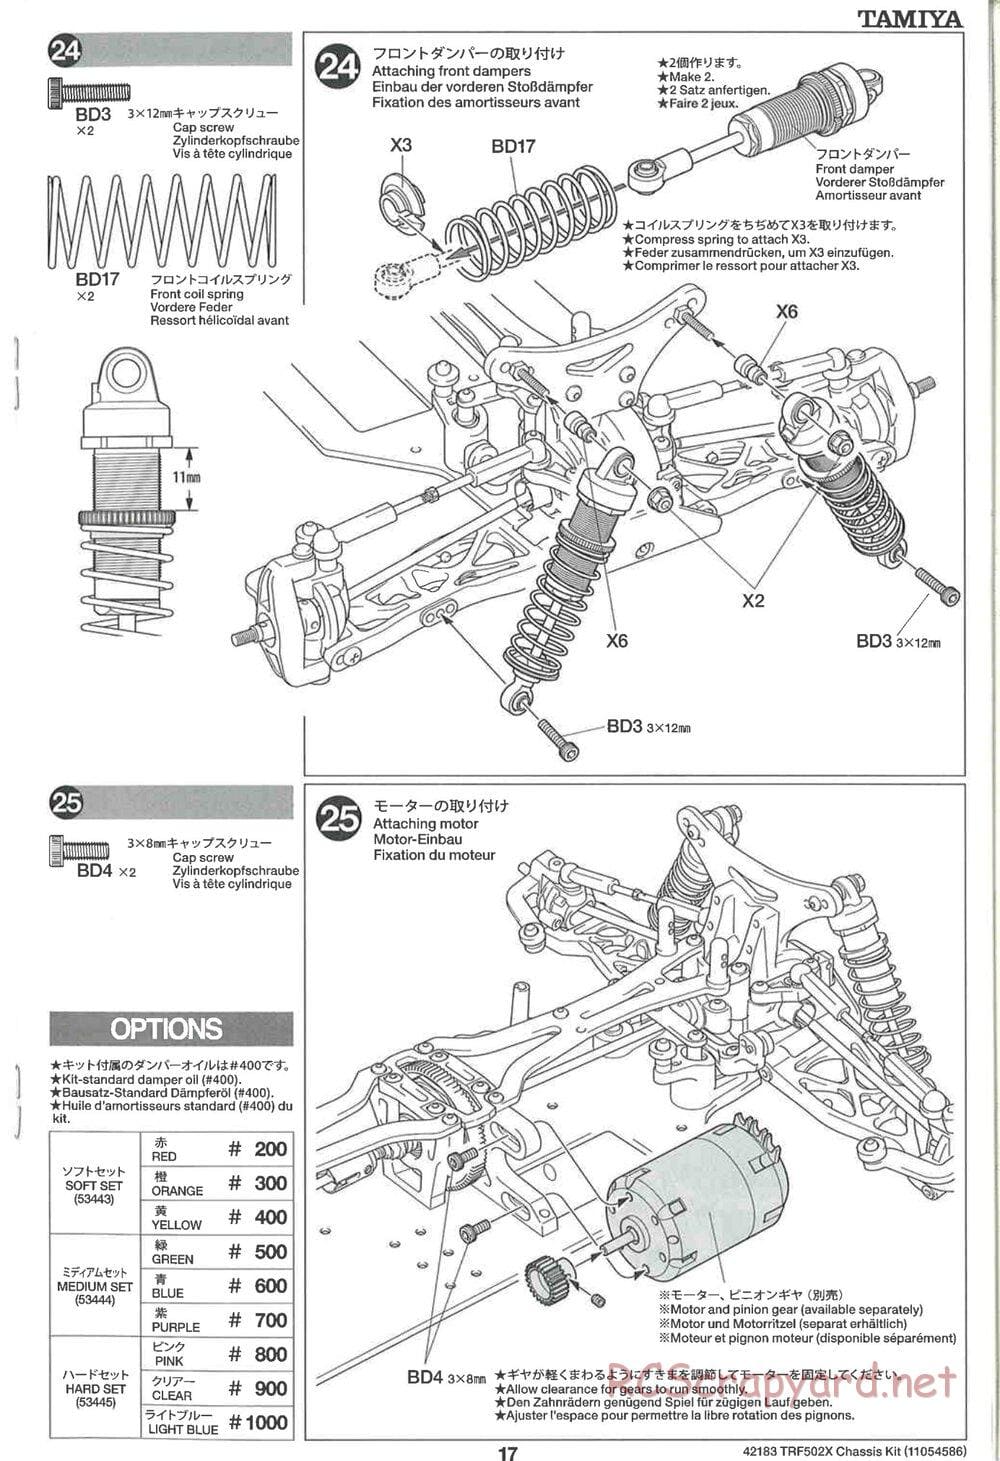 Tamiya - TRF502X Chassis - Manual - Page 17